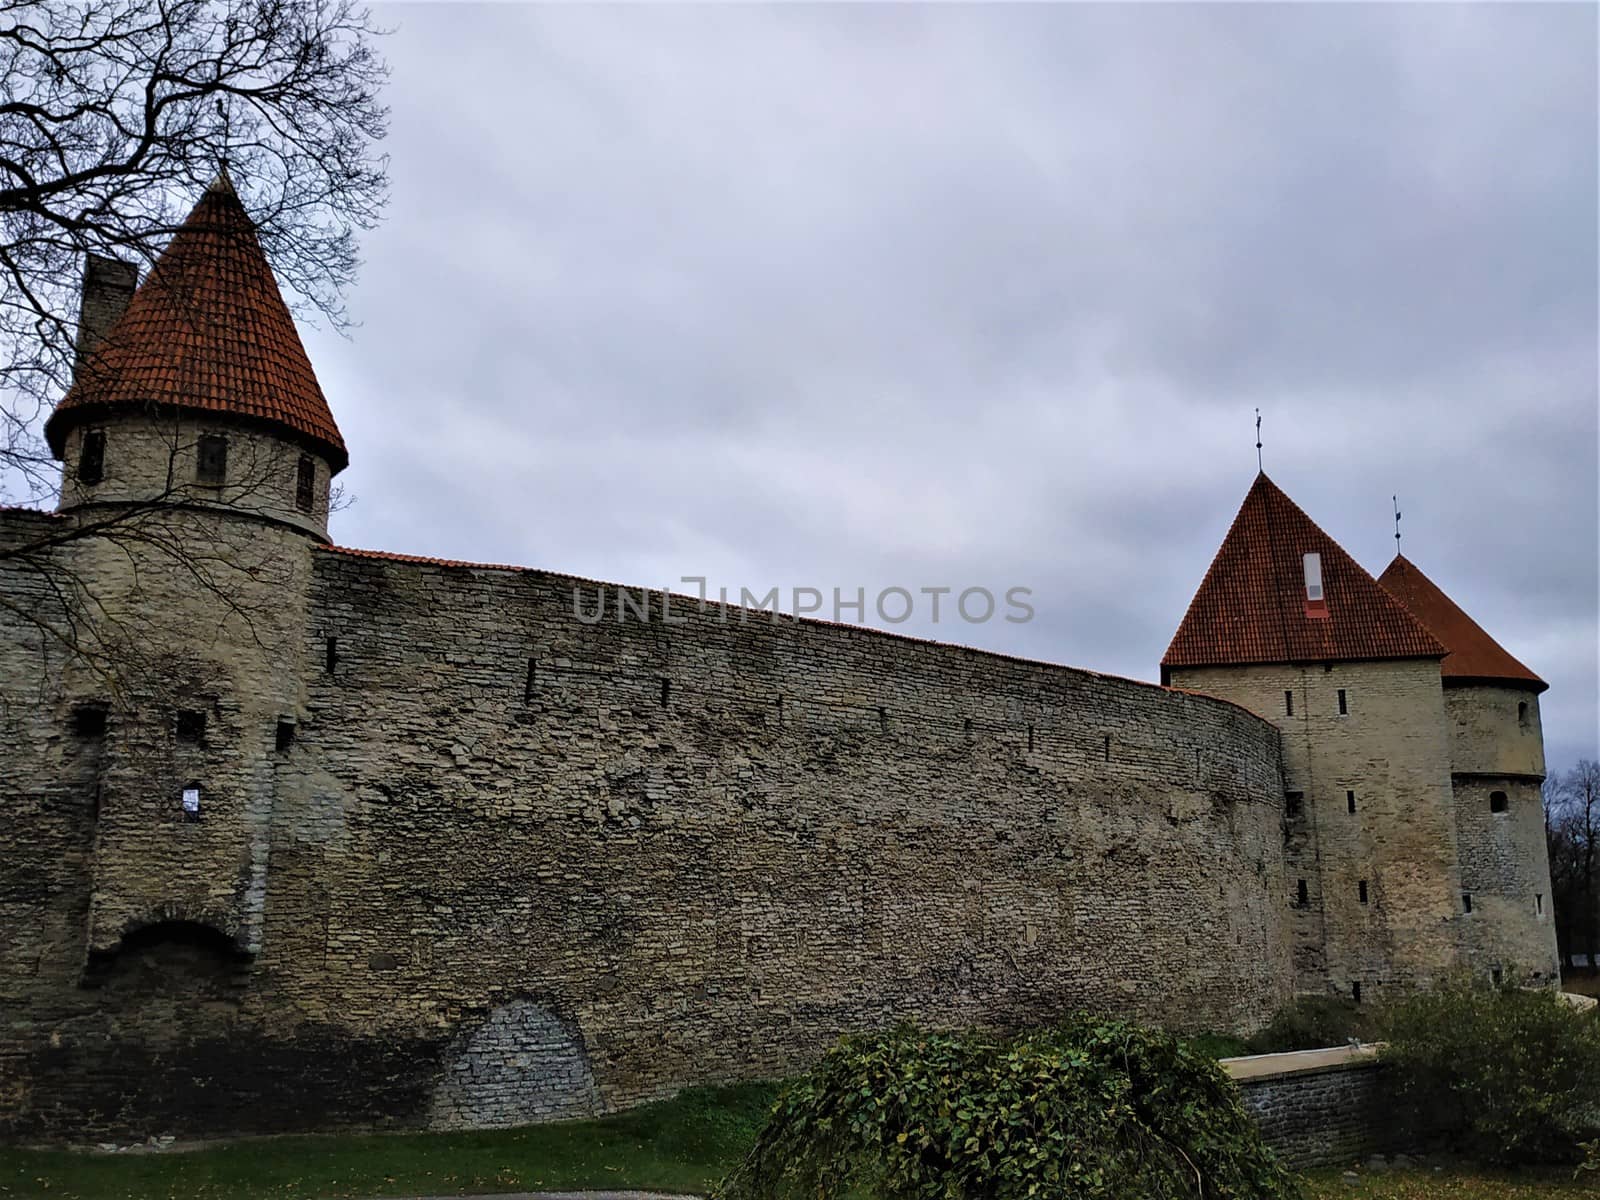 Old city wall of upper town of Tallinn, Estonia